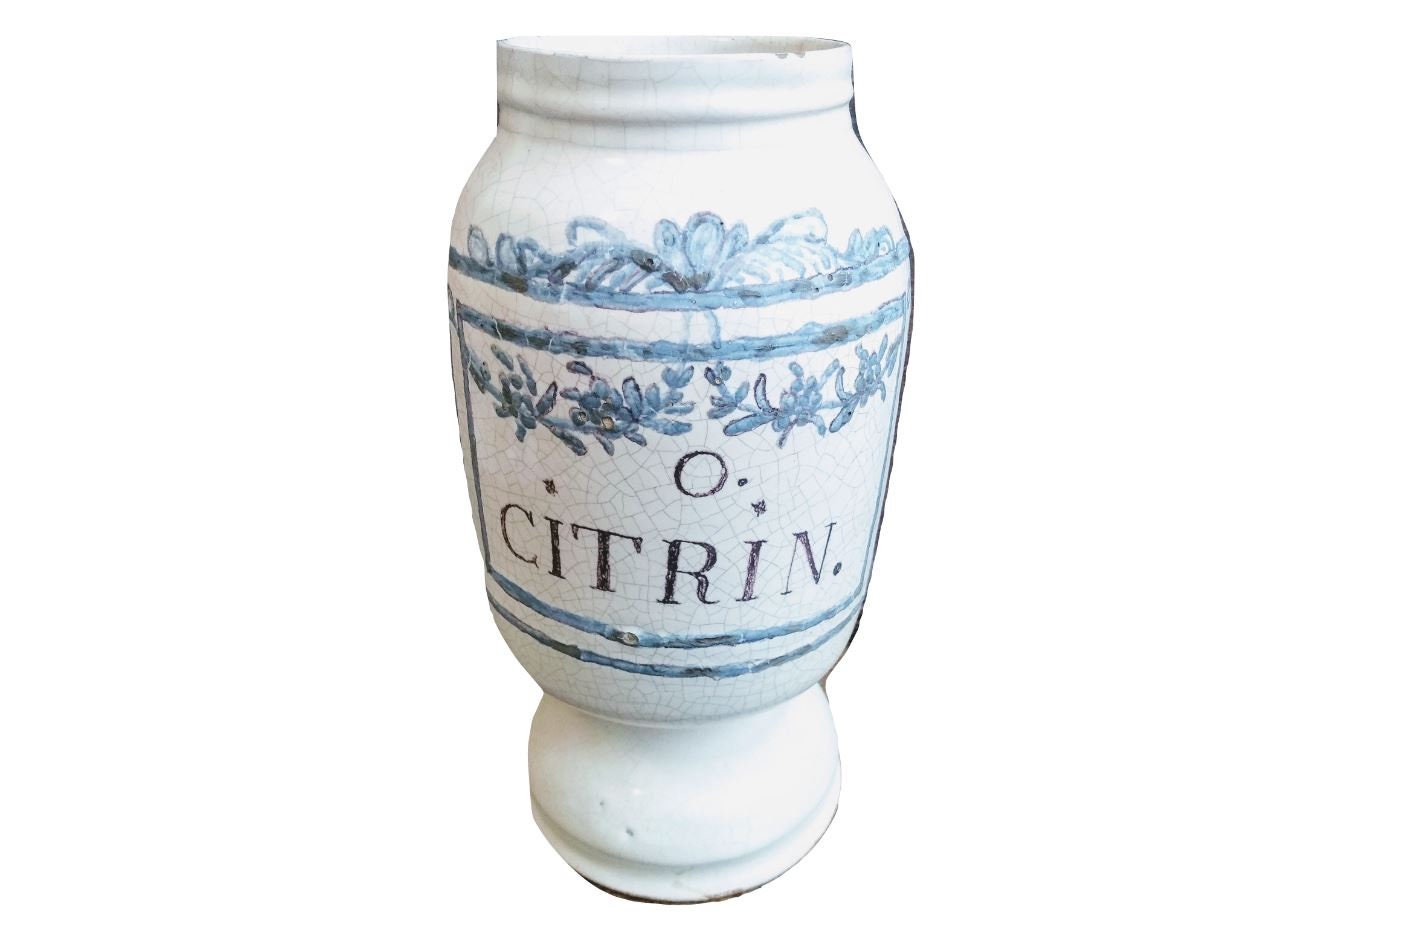 Antique Français O. Citrin Blue White Faience Pottery Pharmacy Medical Apothecary Pot Vase Container